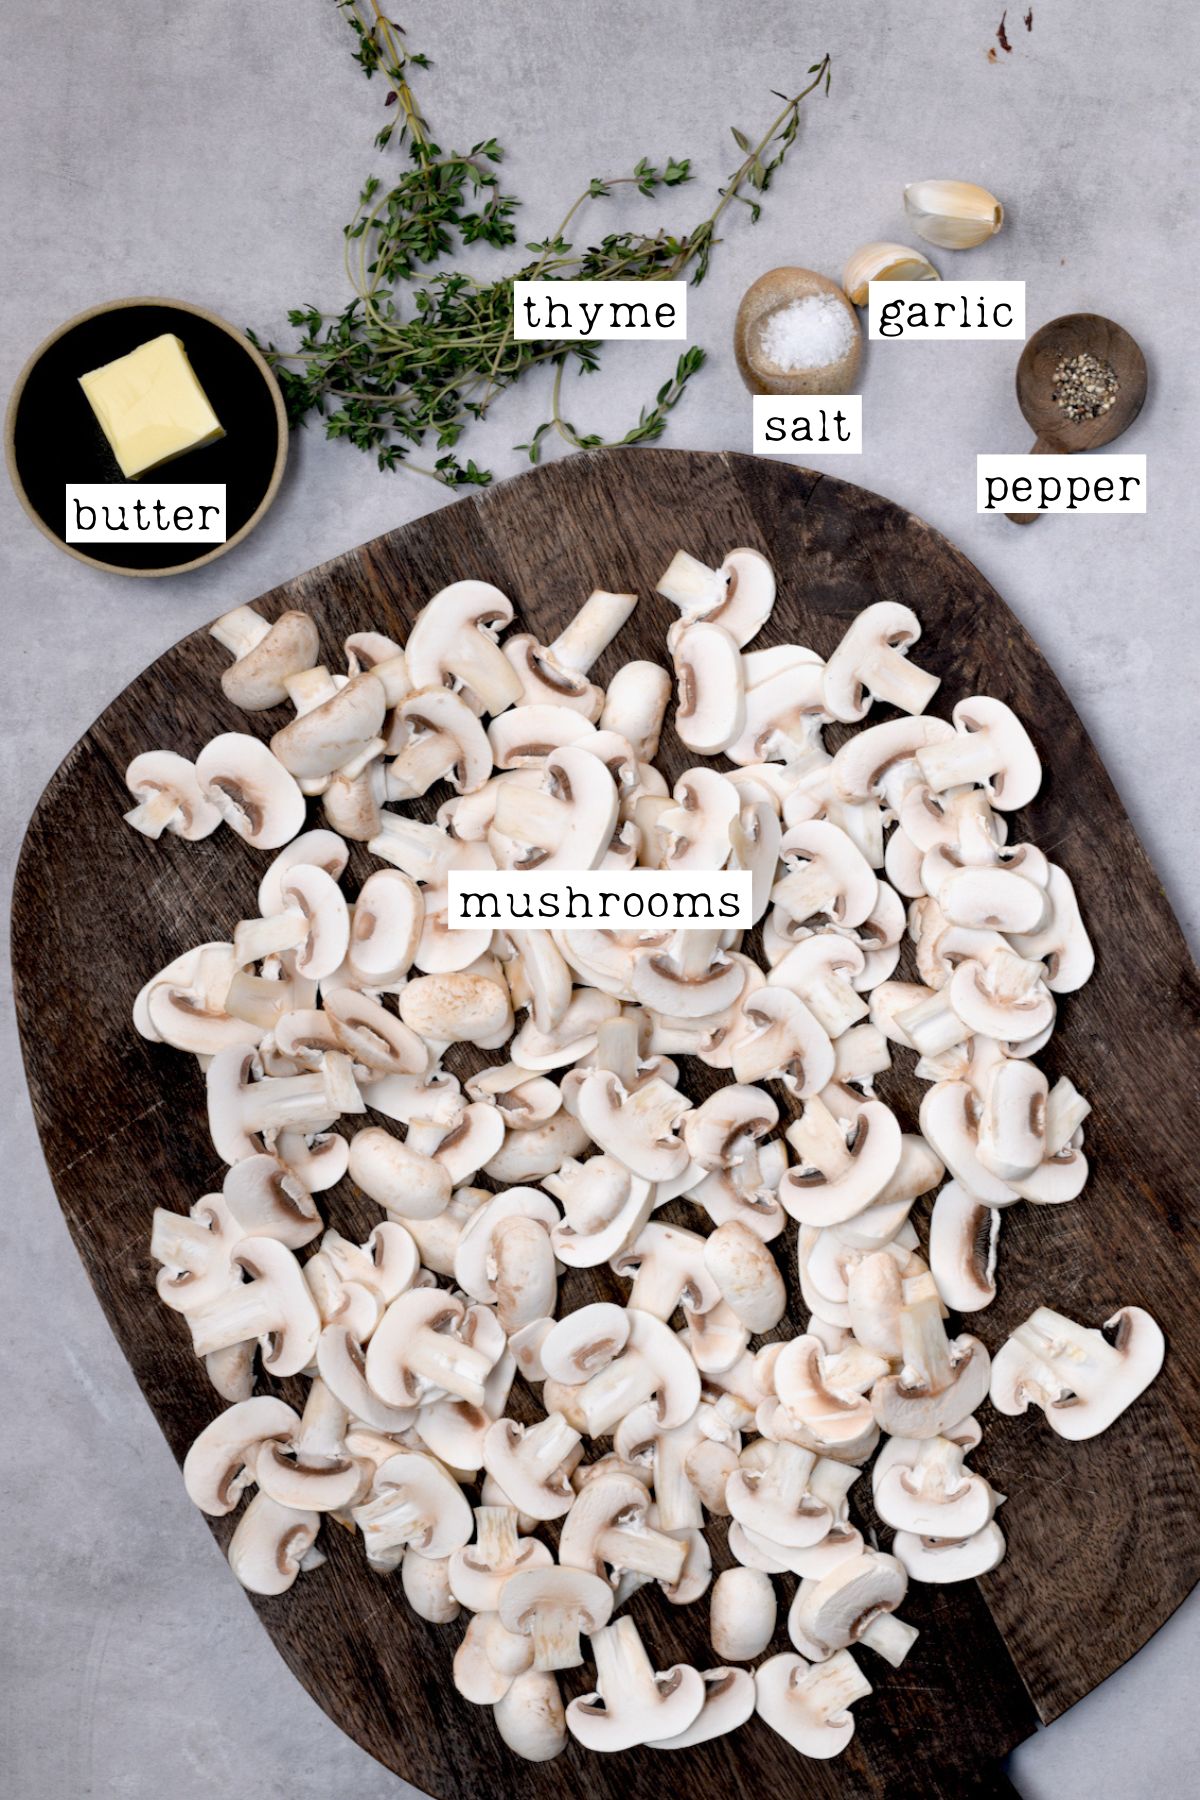 Ingredients for sautéed mushrooms